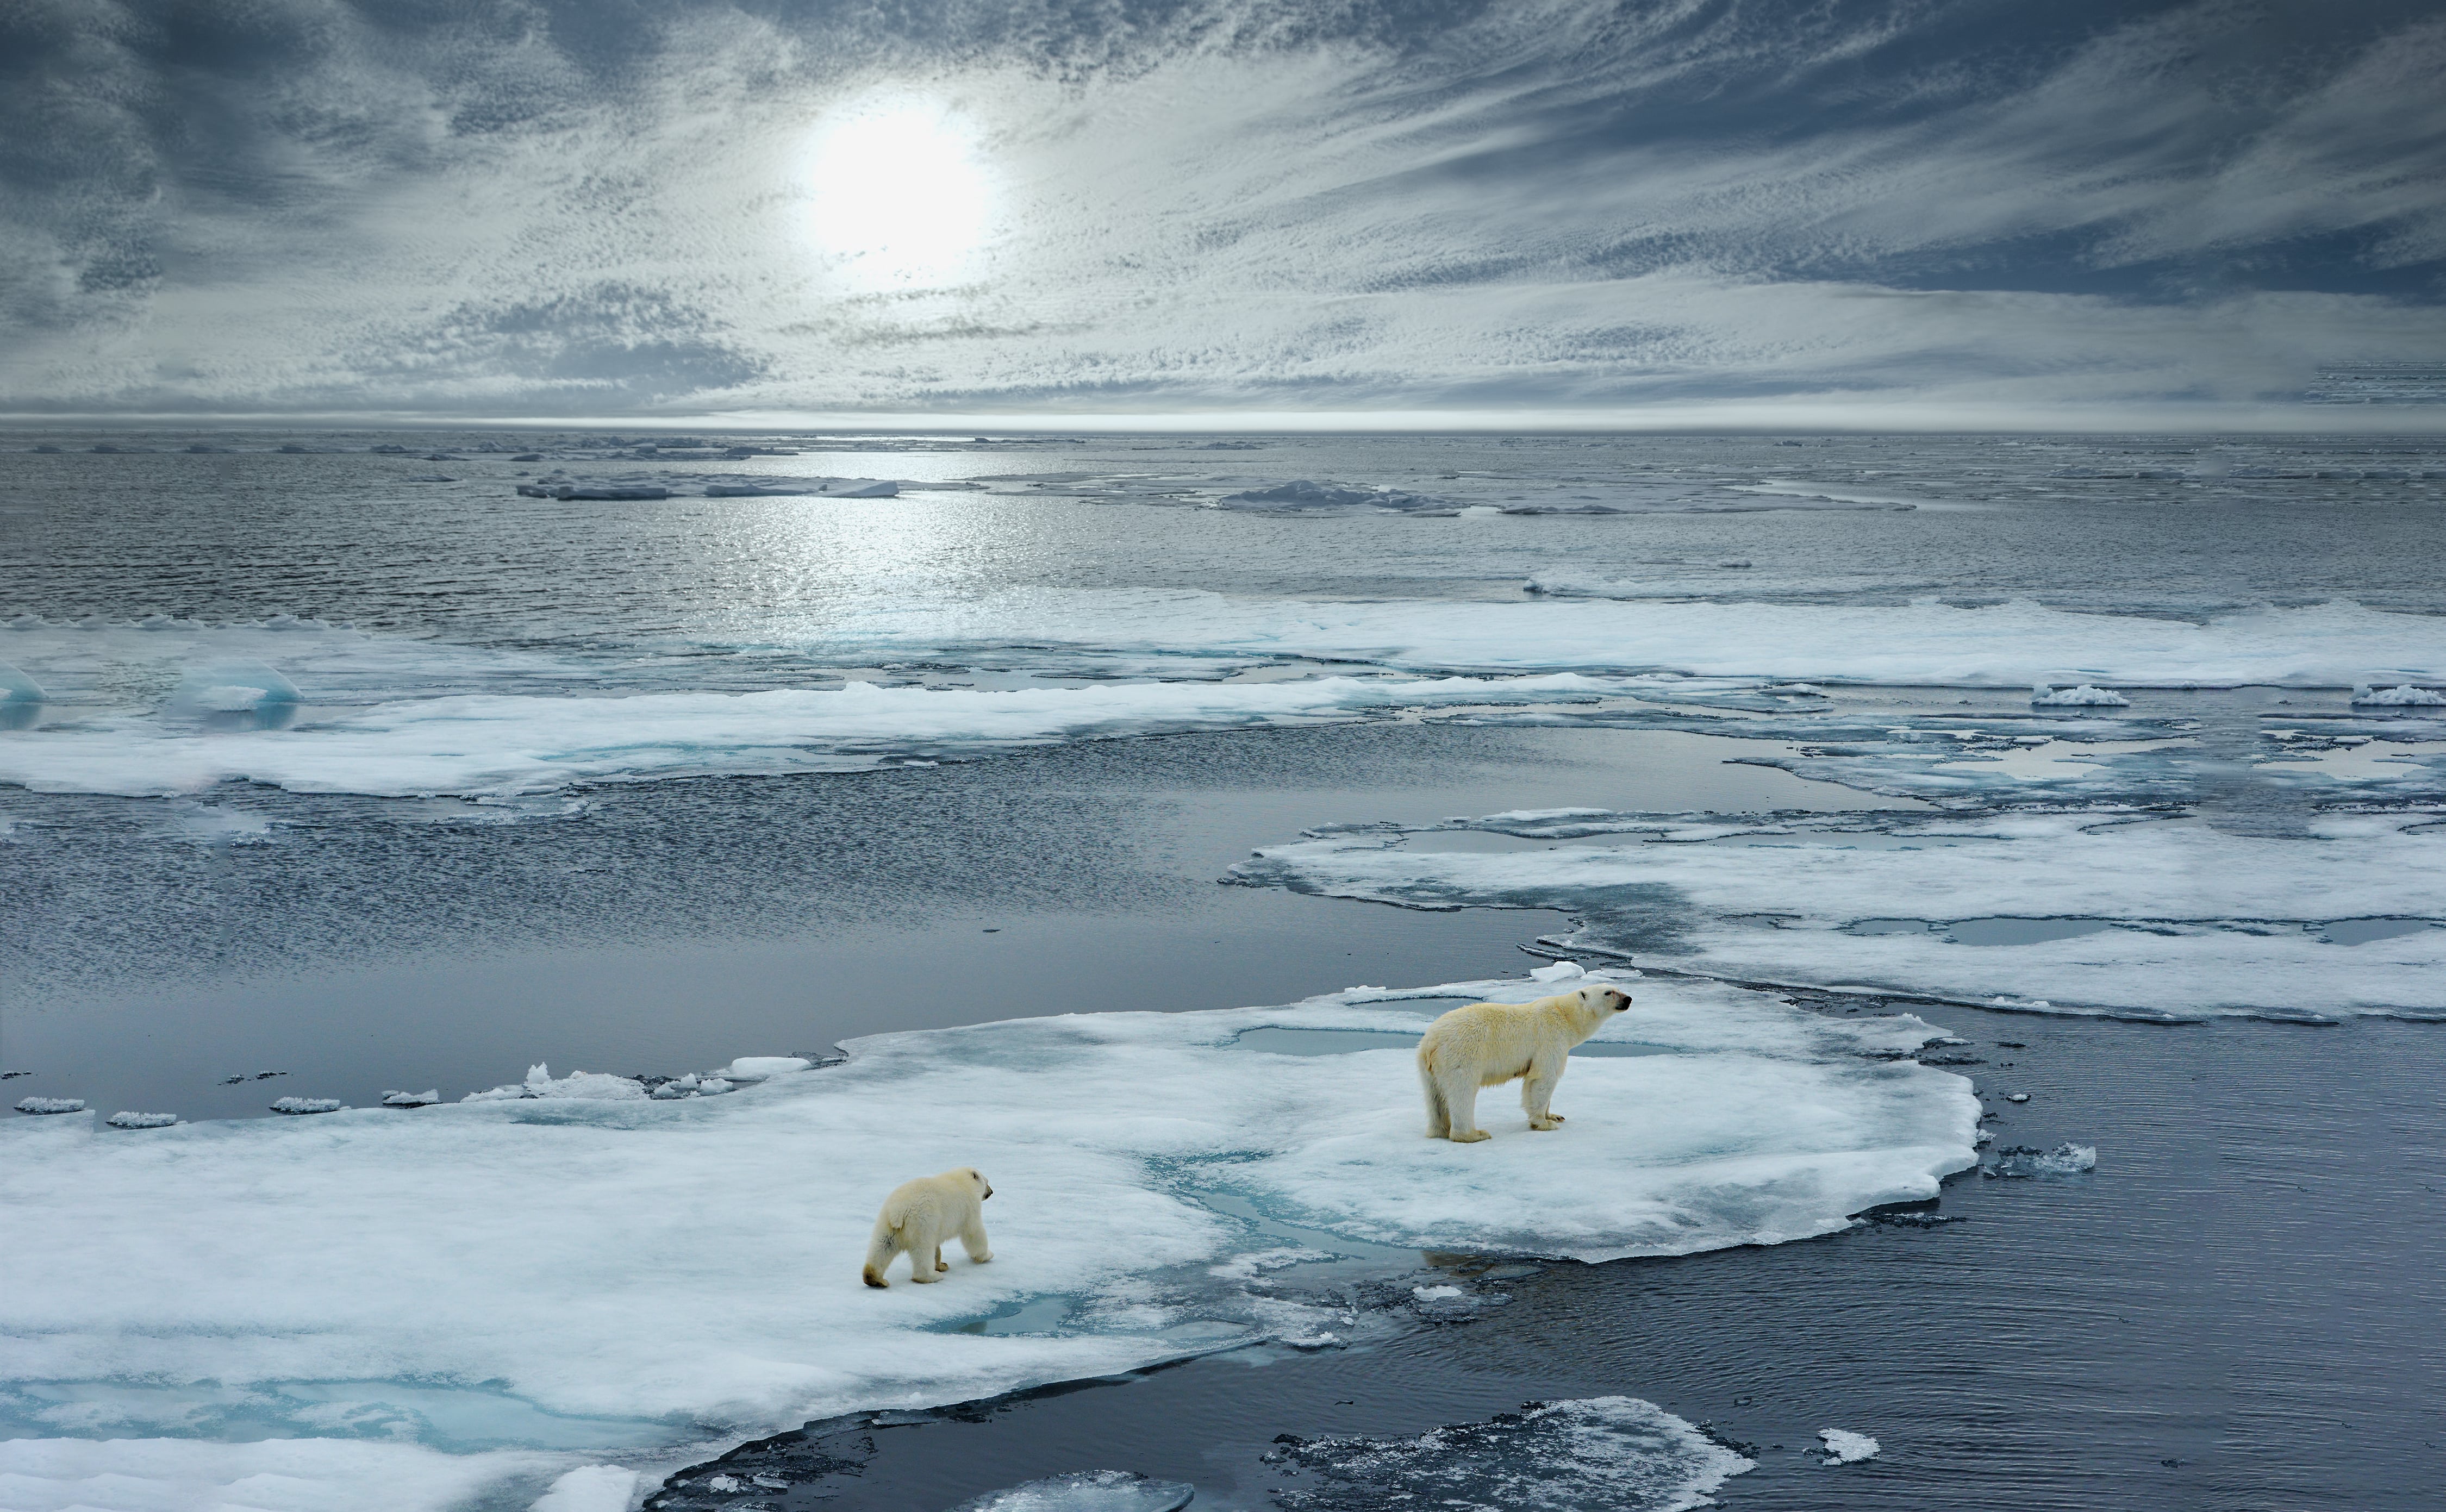 Про ледовитый океан. Арктика Северный Ледовитый океан. Северный полюс Северный Ледовитый океан. Северный Ледовитый океан белый медведь. Карское море белый медведь.